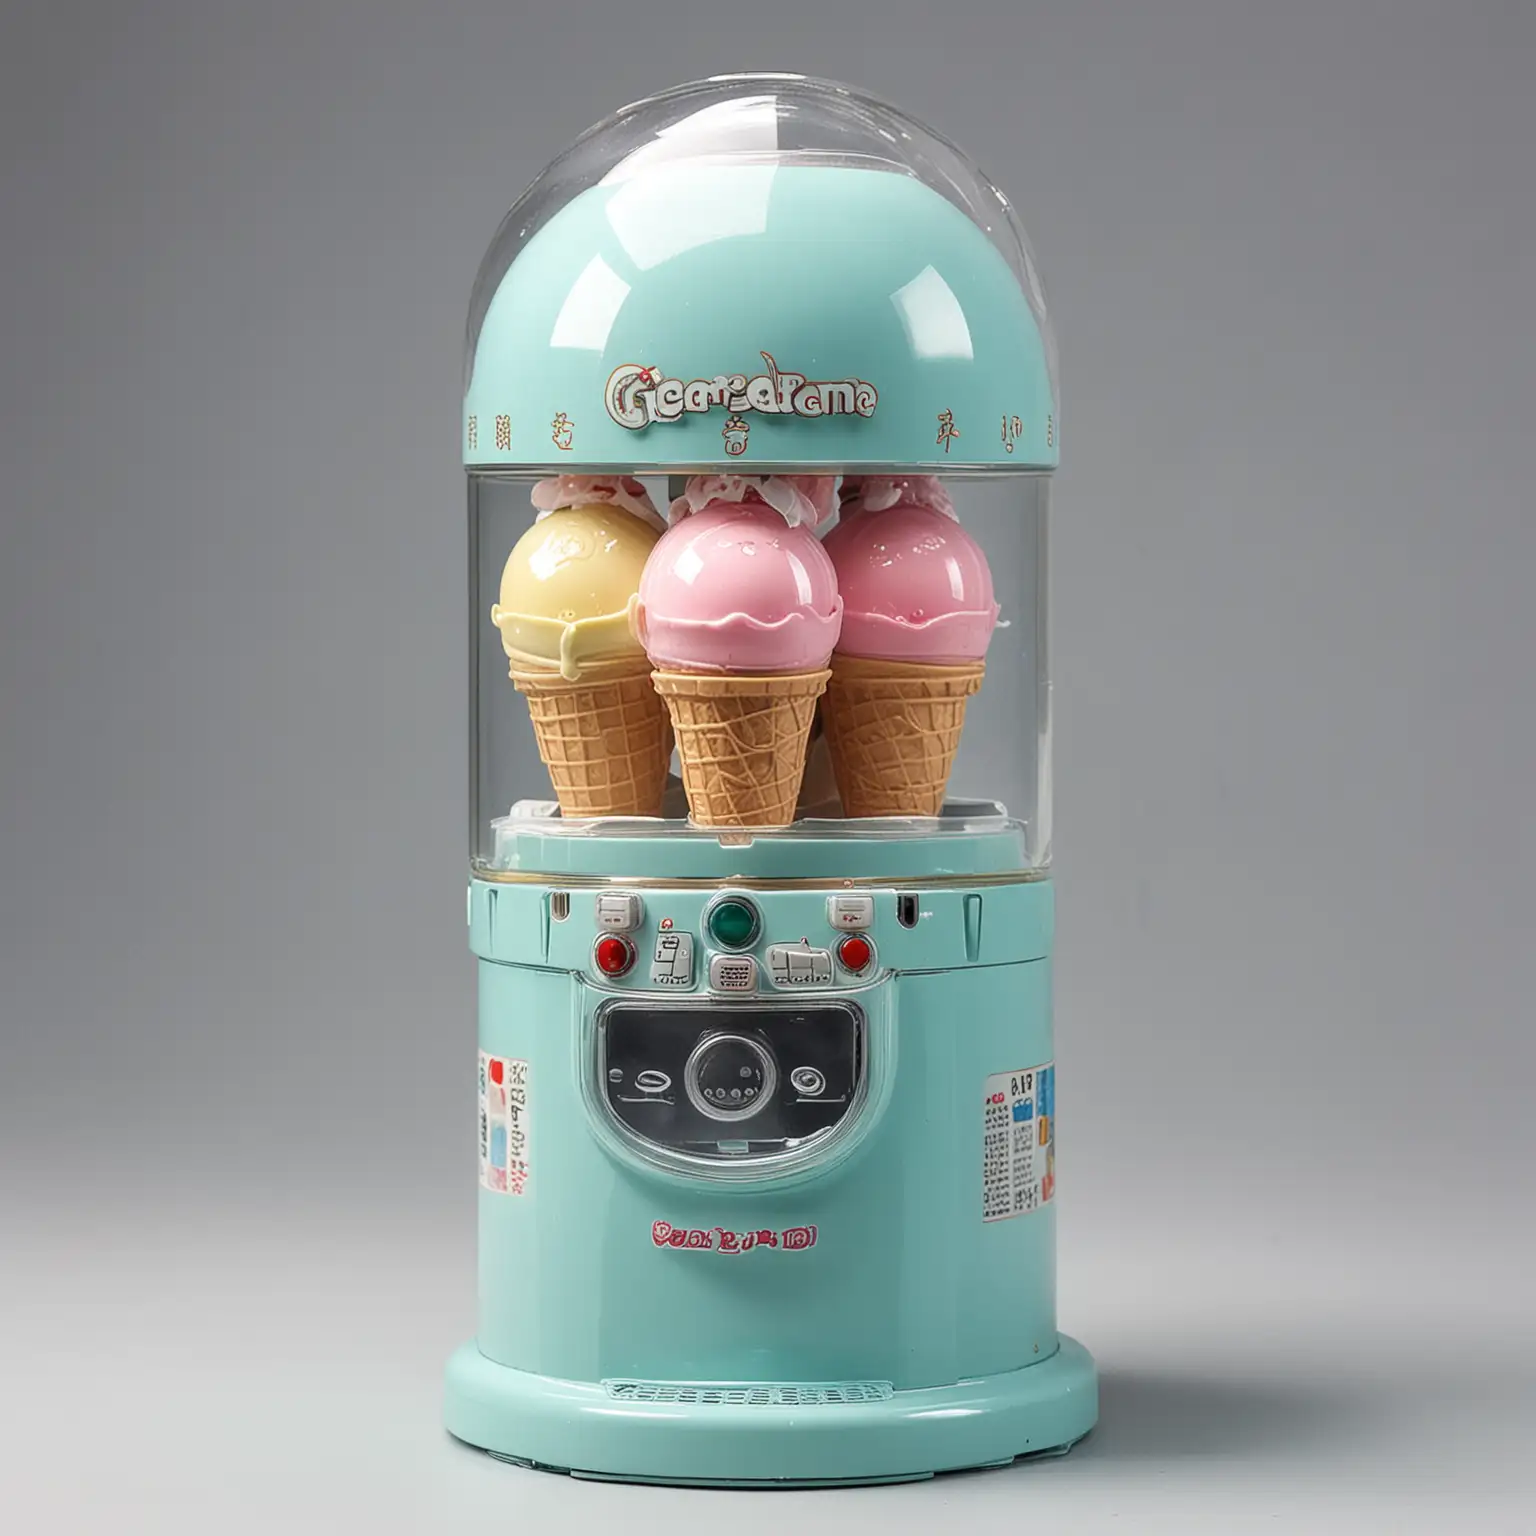 Gacha machine, ice cream color scheme, has big turn dial, has big transparent round ball